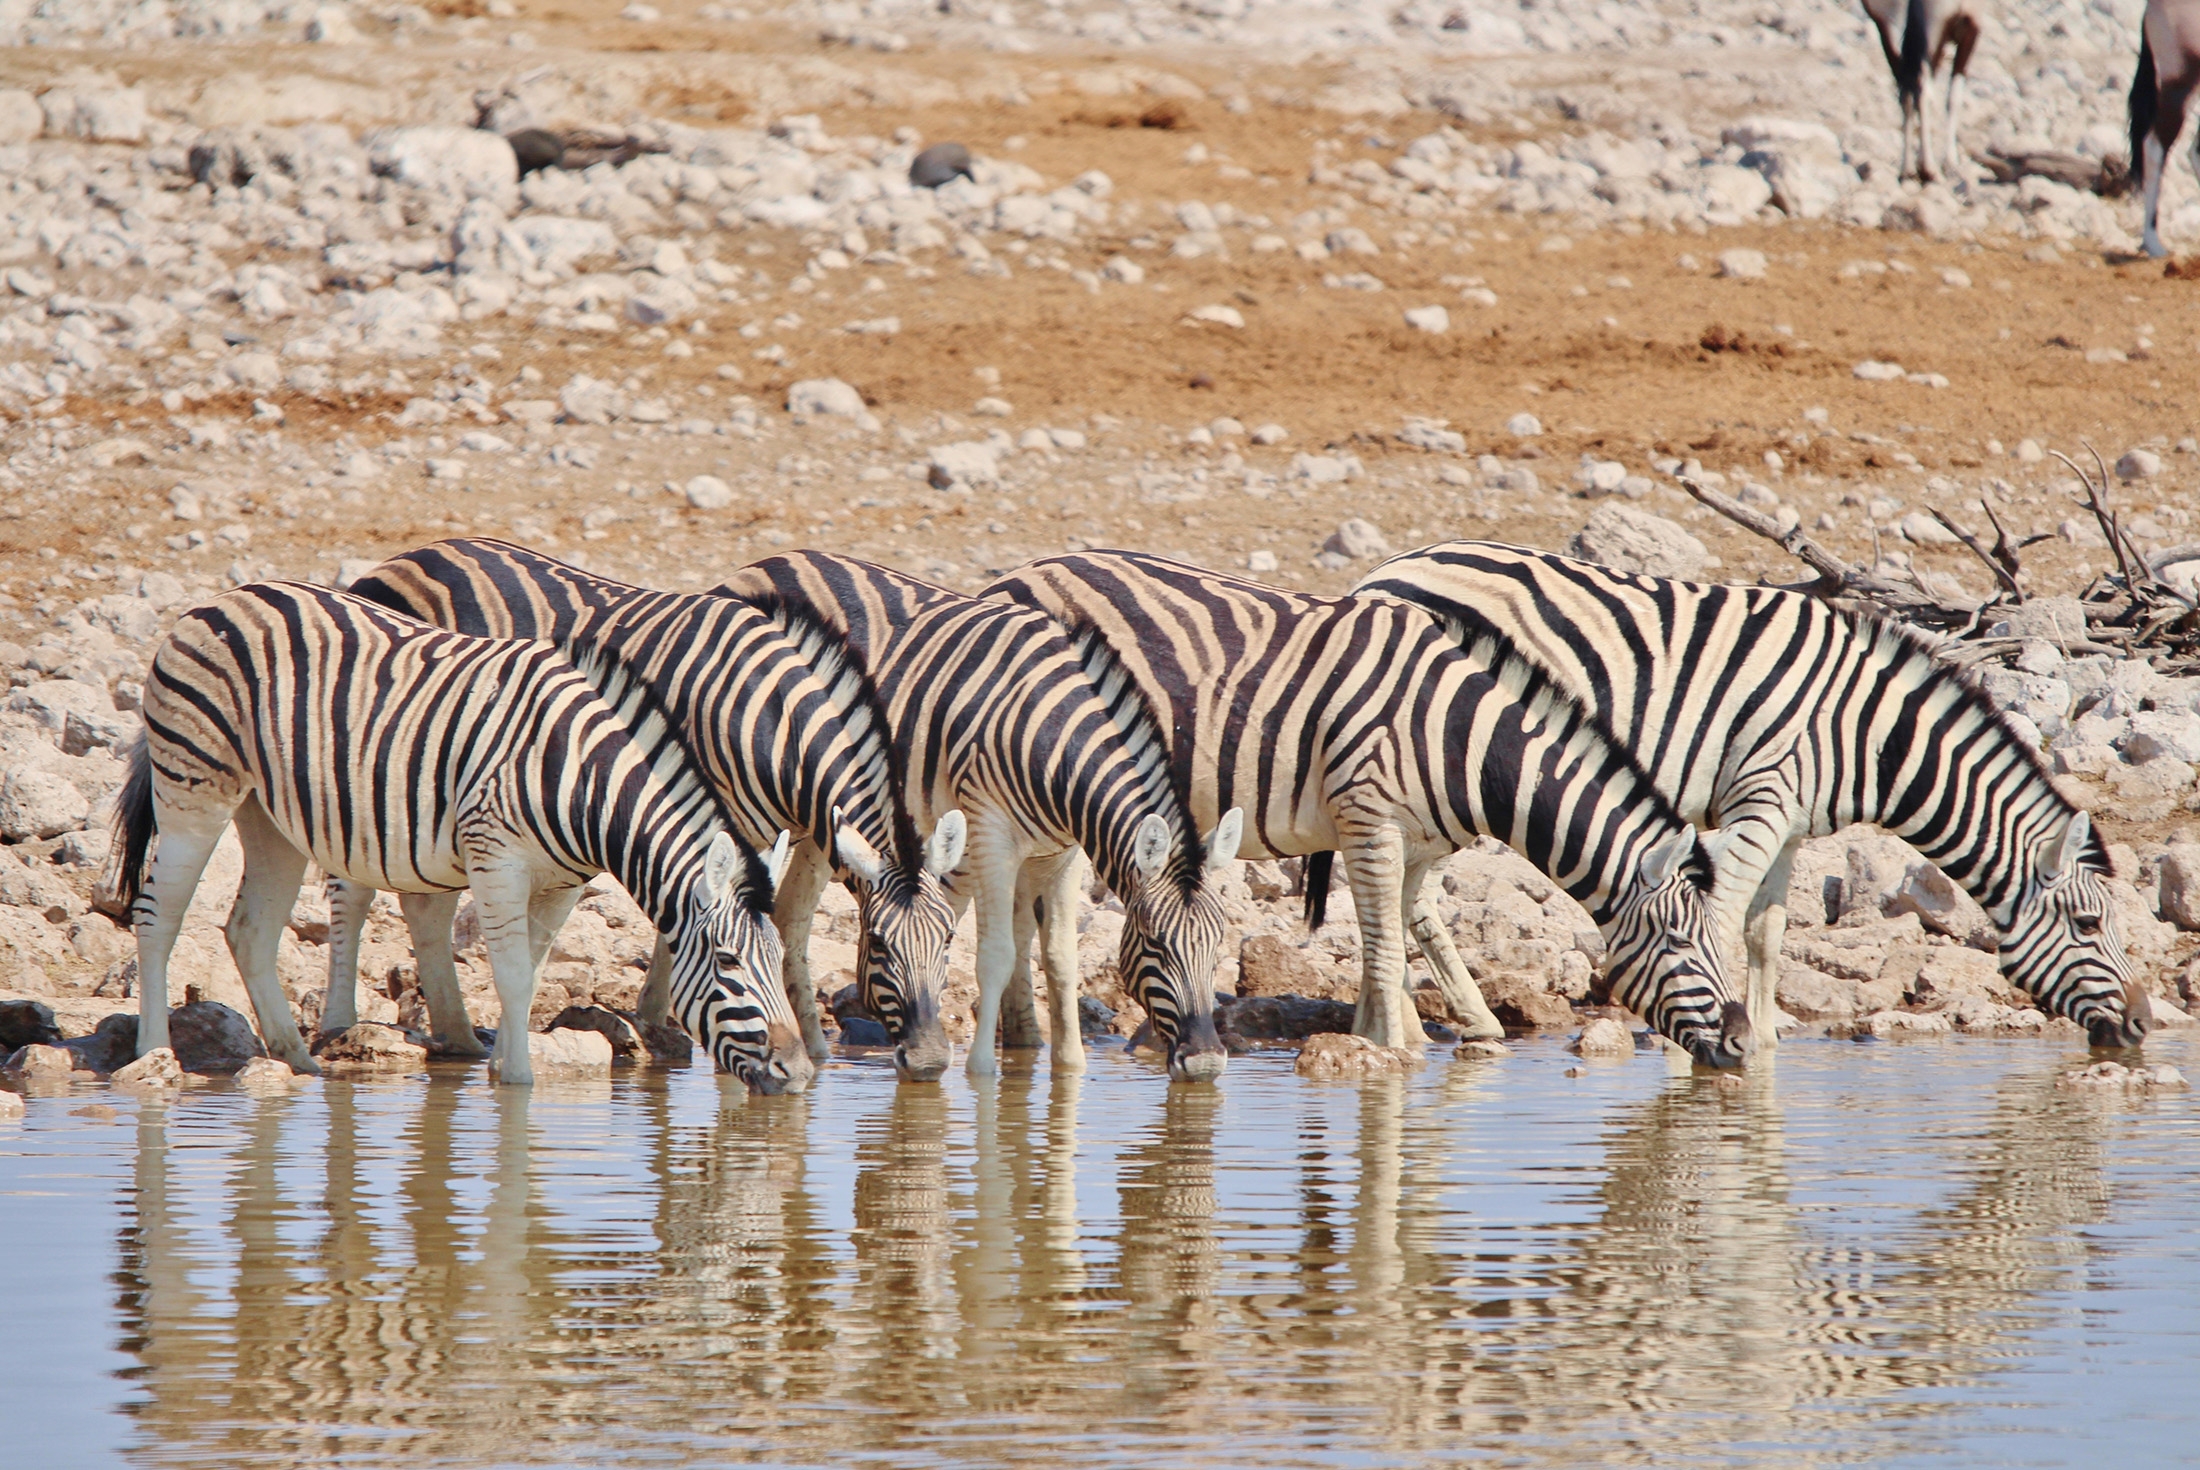 Zebras by the waterhole in Etosha National Park, Namibia